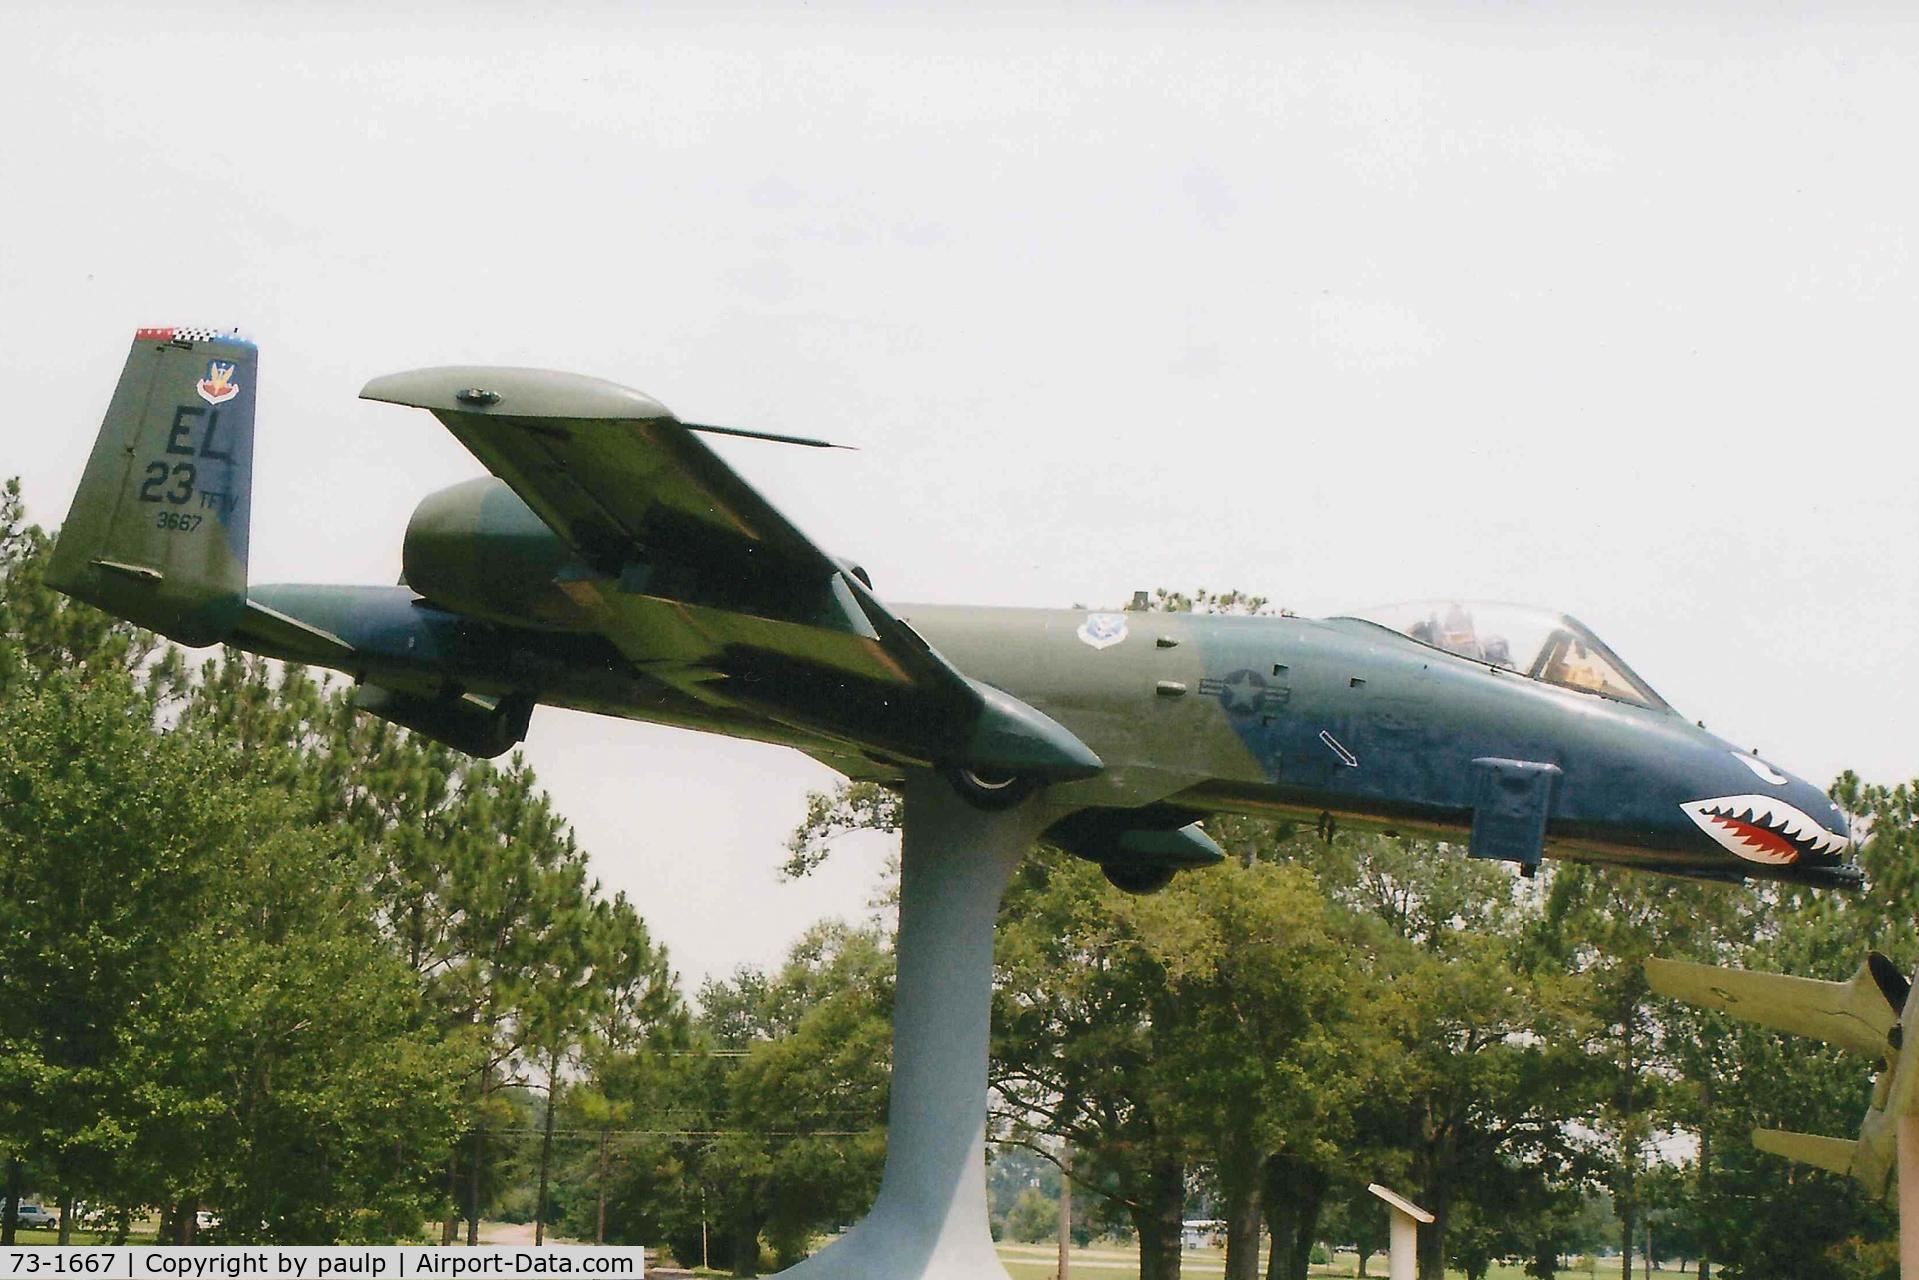 73-1667, 1973 Fairchild Republic A-10A Thunderbolt II C/N A10-0004, Fairchild A-10A Thunderbolt II  1992 -Scanned Photo